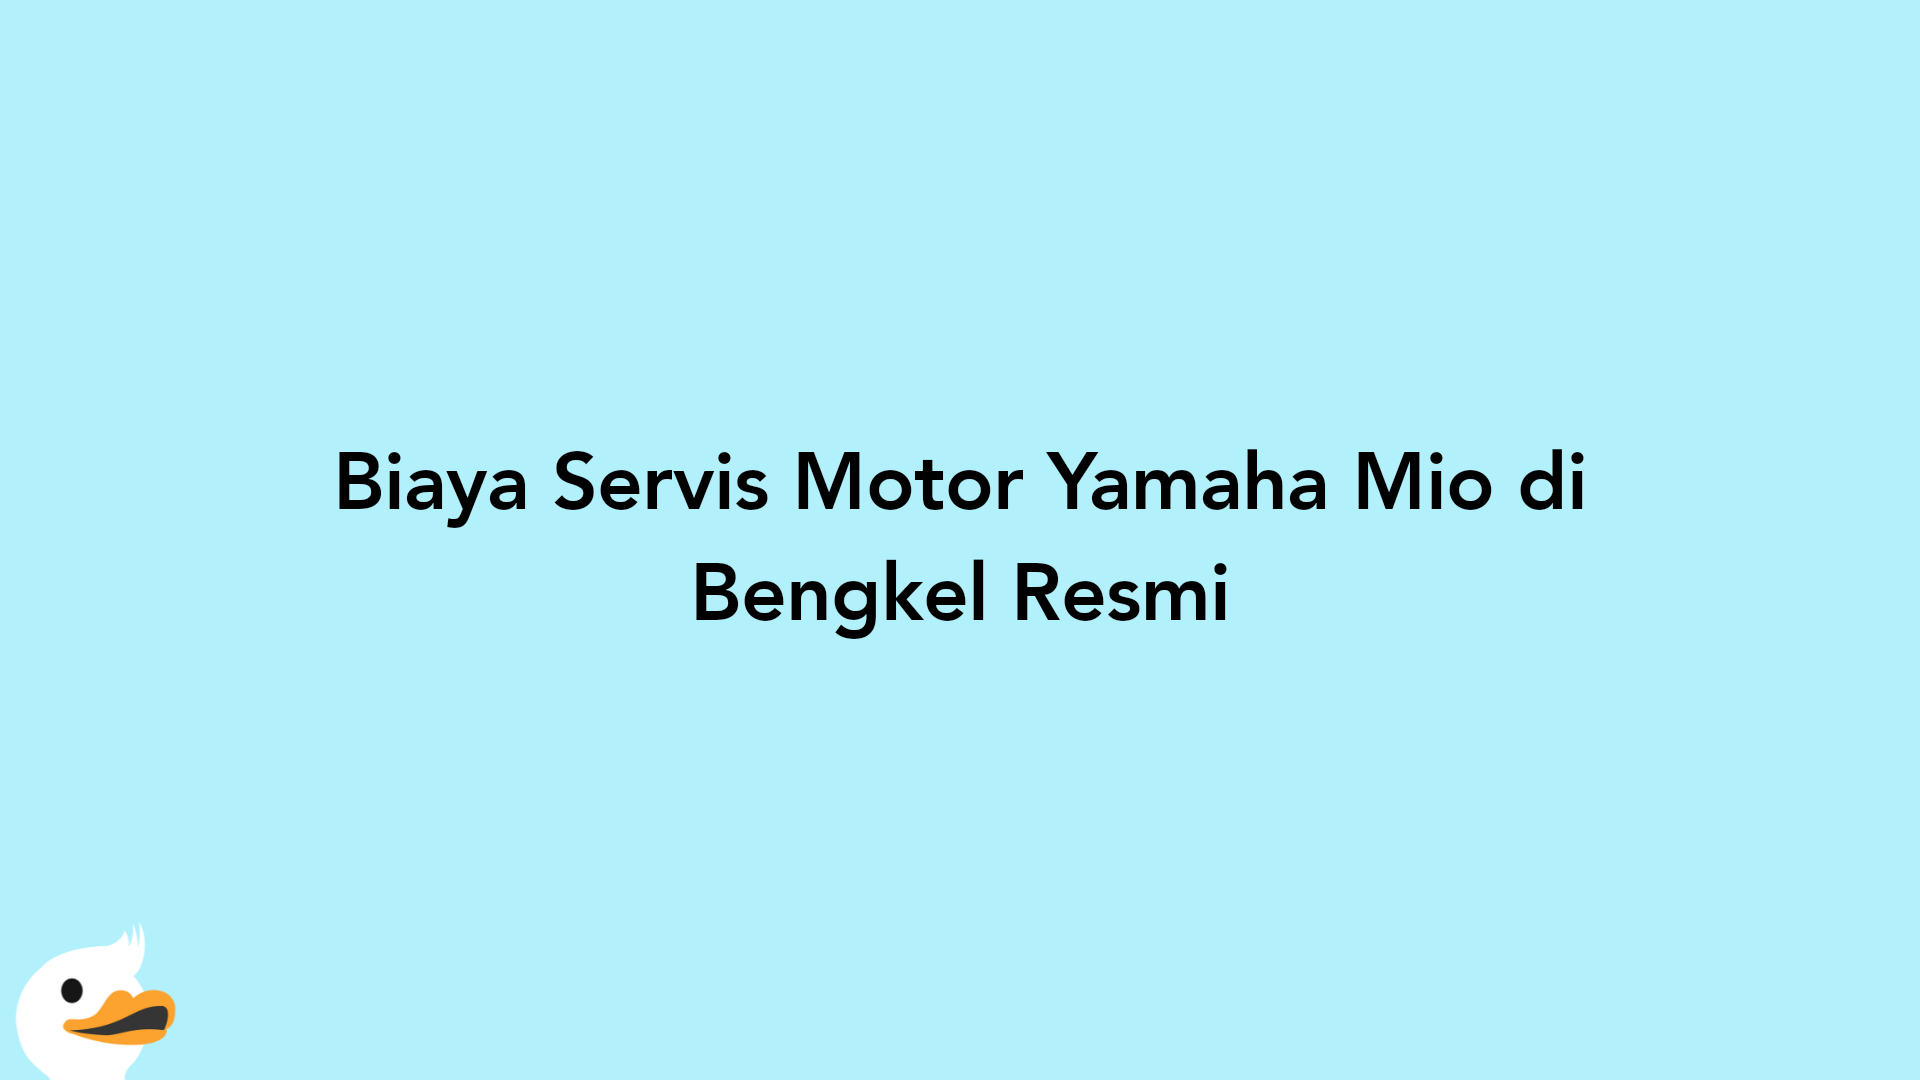 Biaya Servis Motor Yamaha Mio di Bengkel Resmi